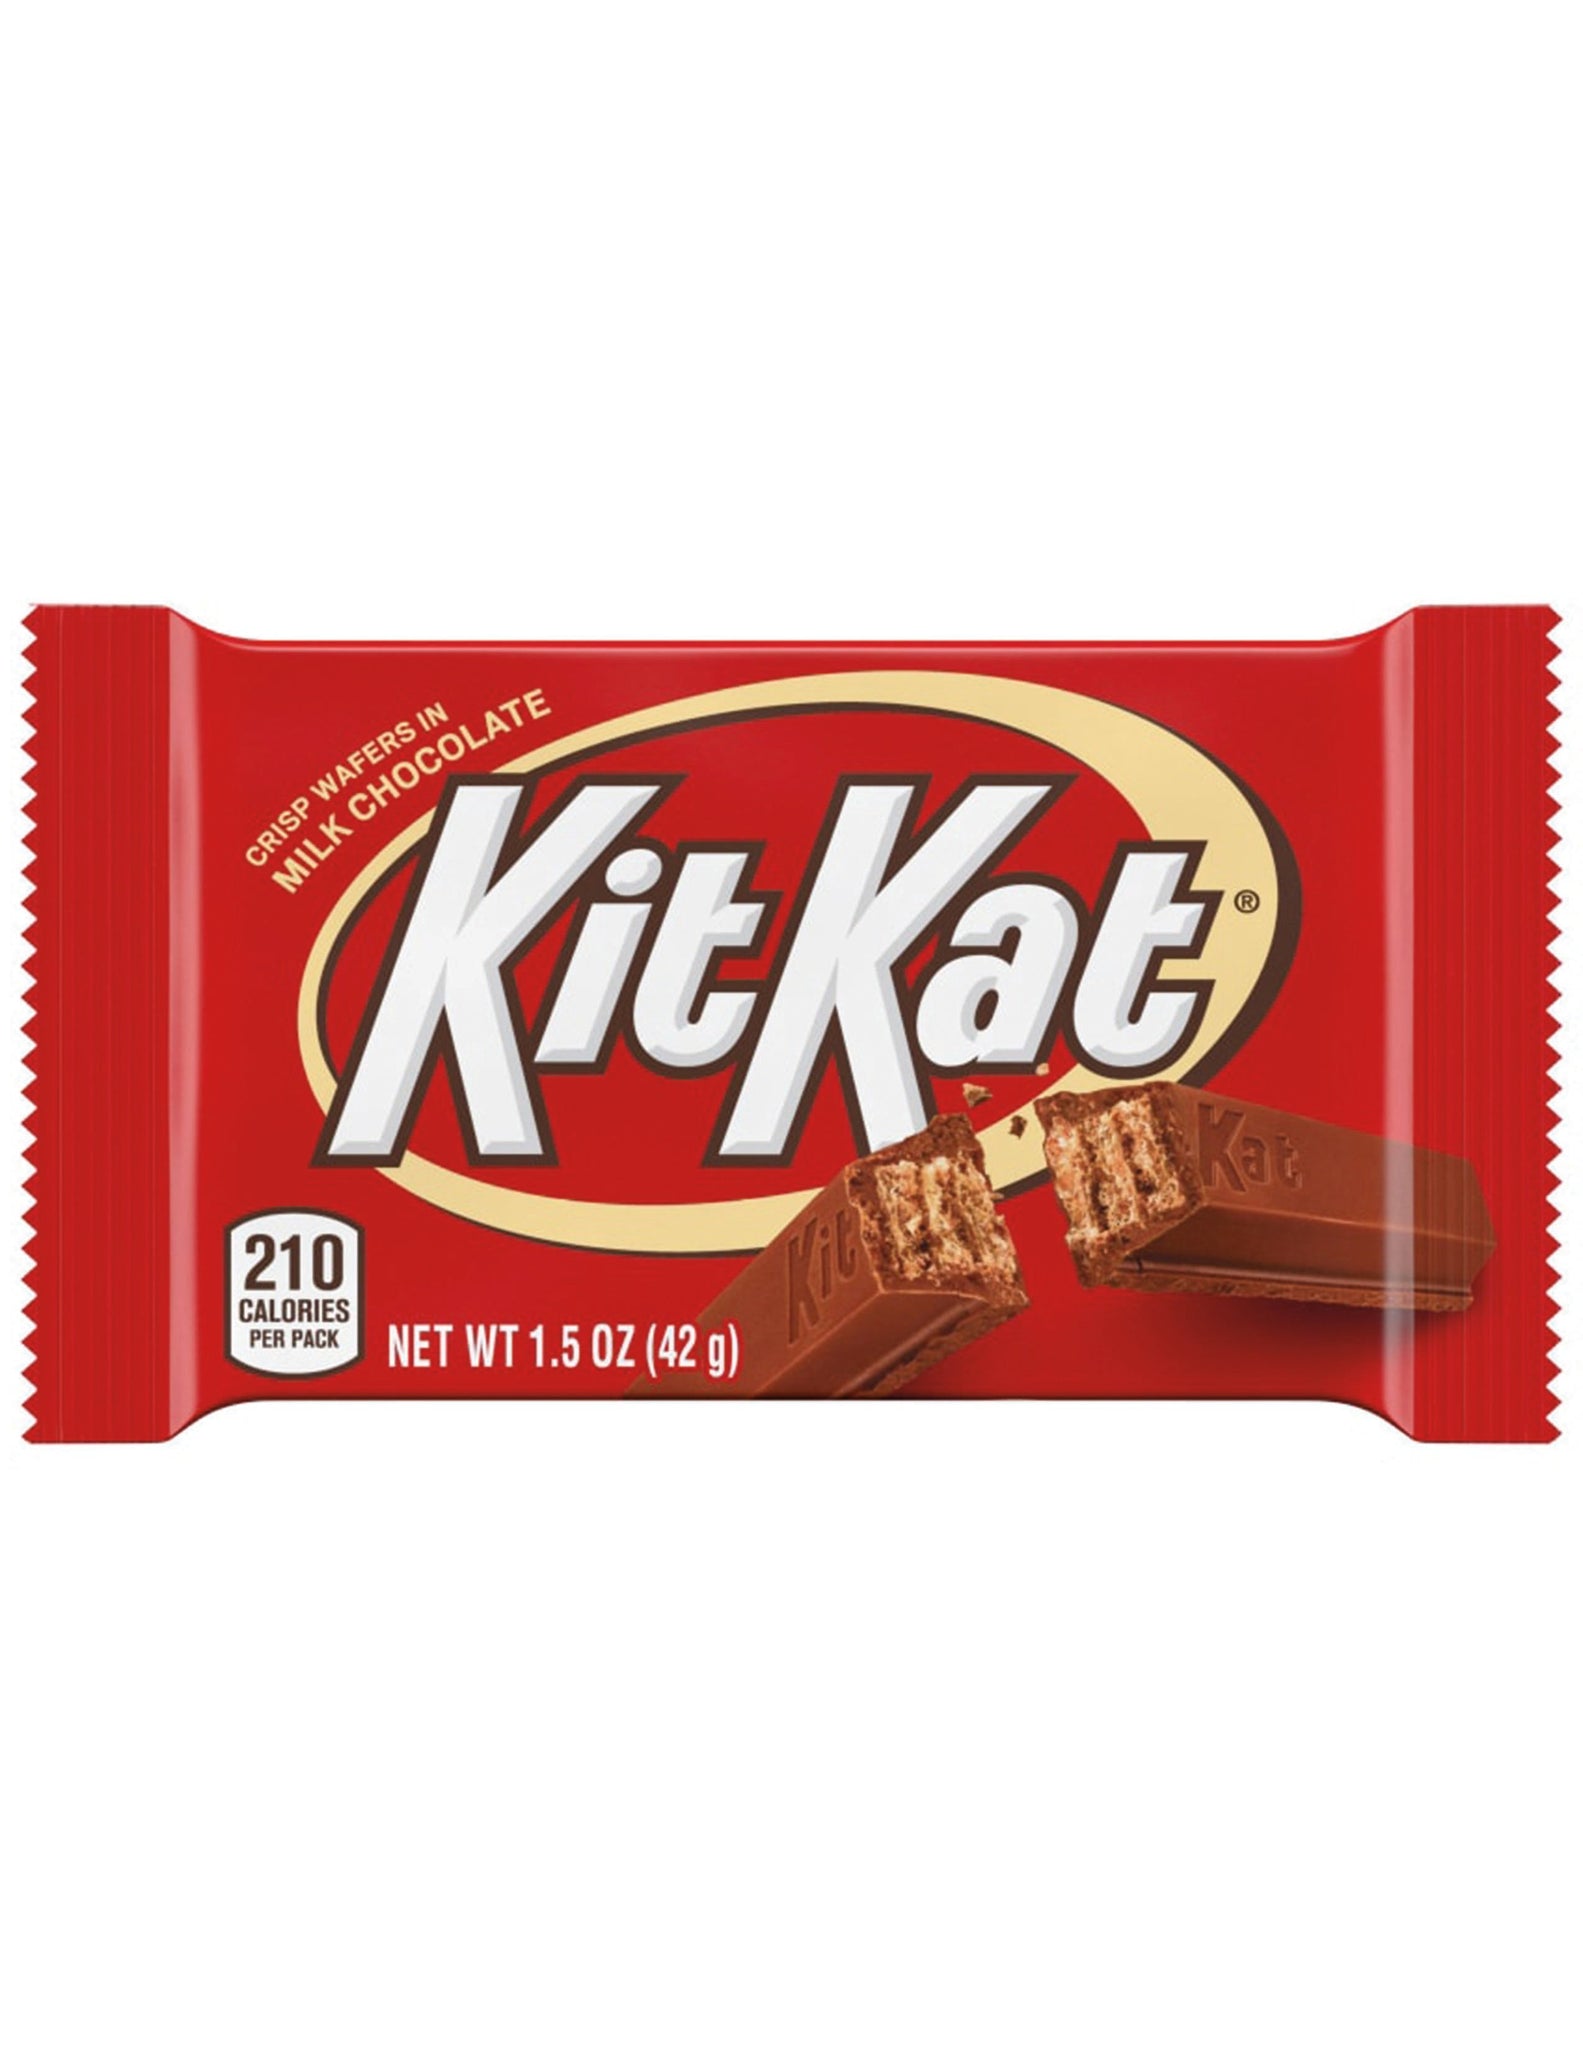 bah>Kit Kat, one